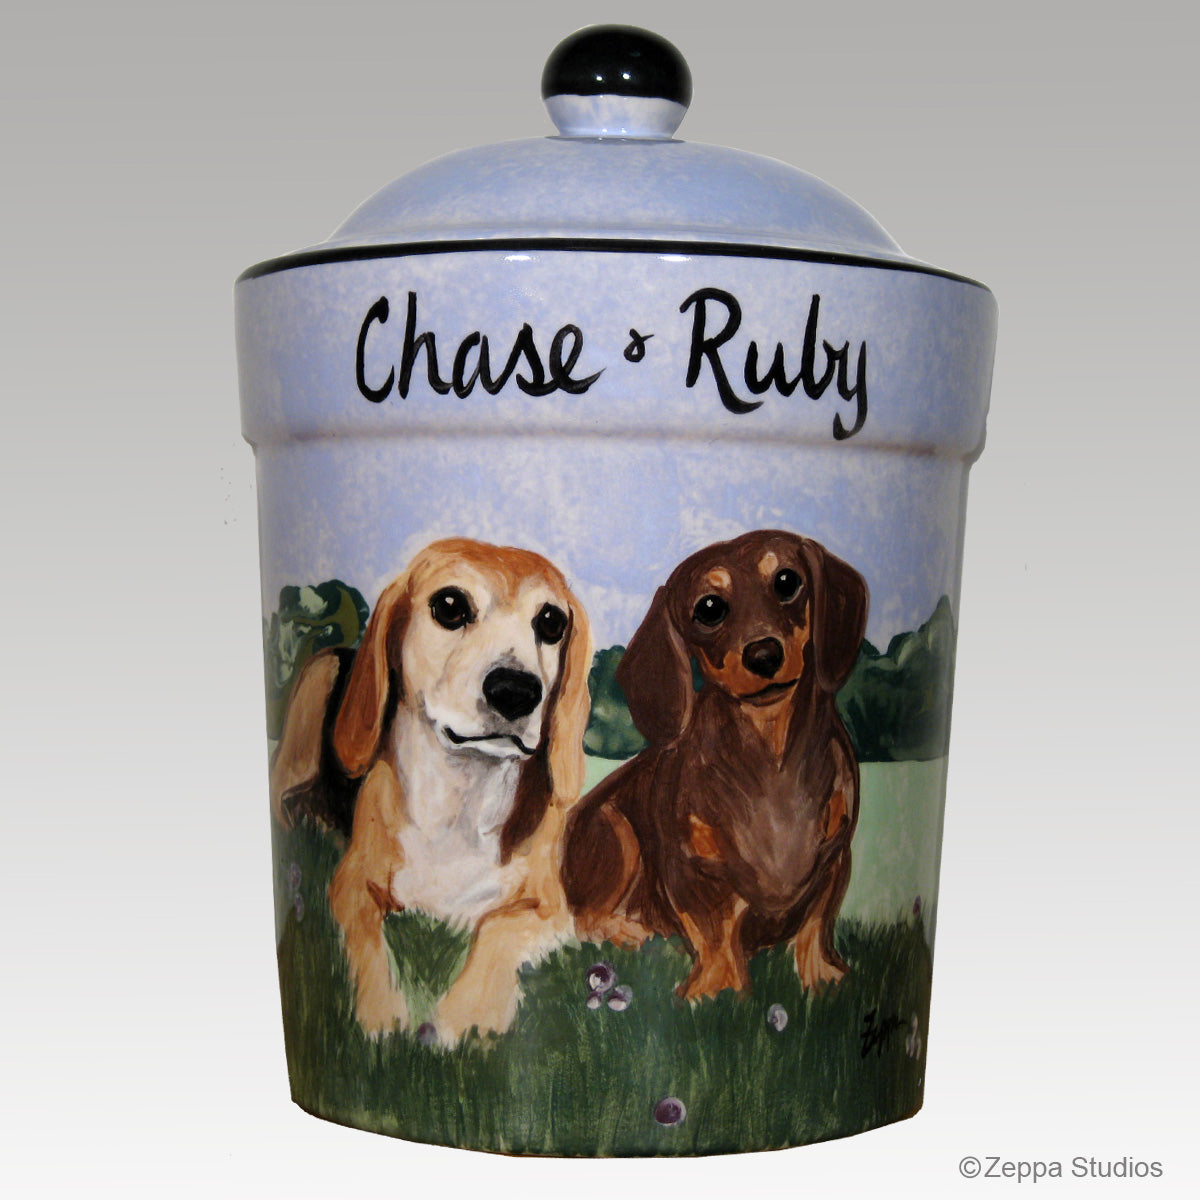 Custom Hand Painted Ceramic Treat Jar, "Chase & Ruby" by Zeppa Studios